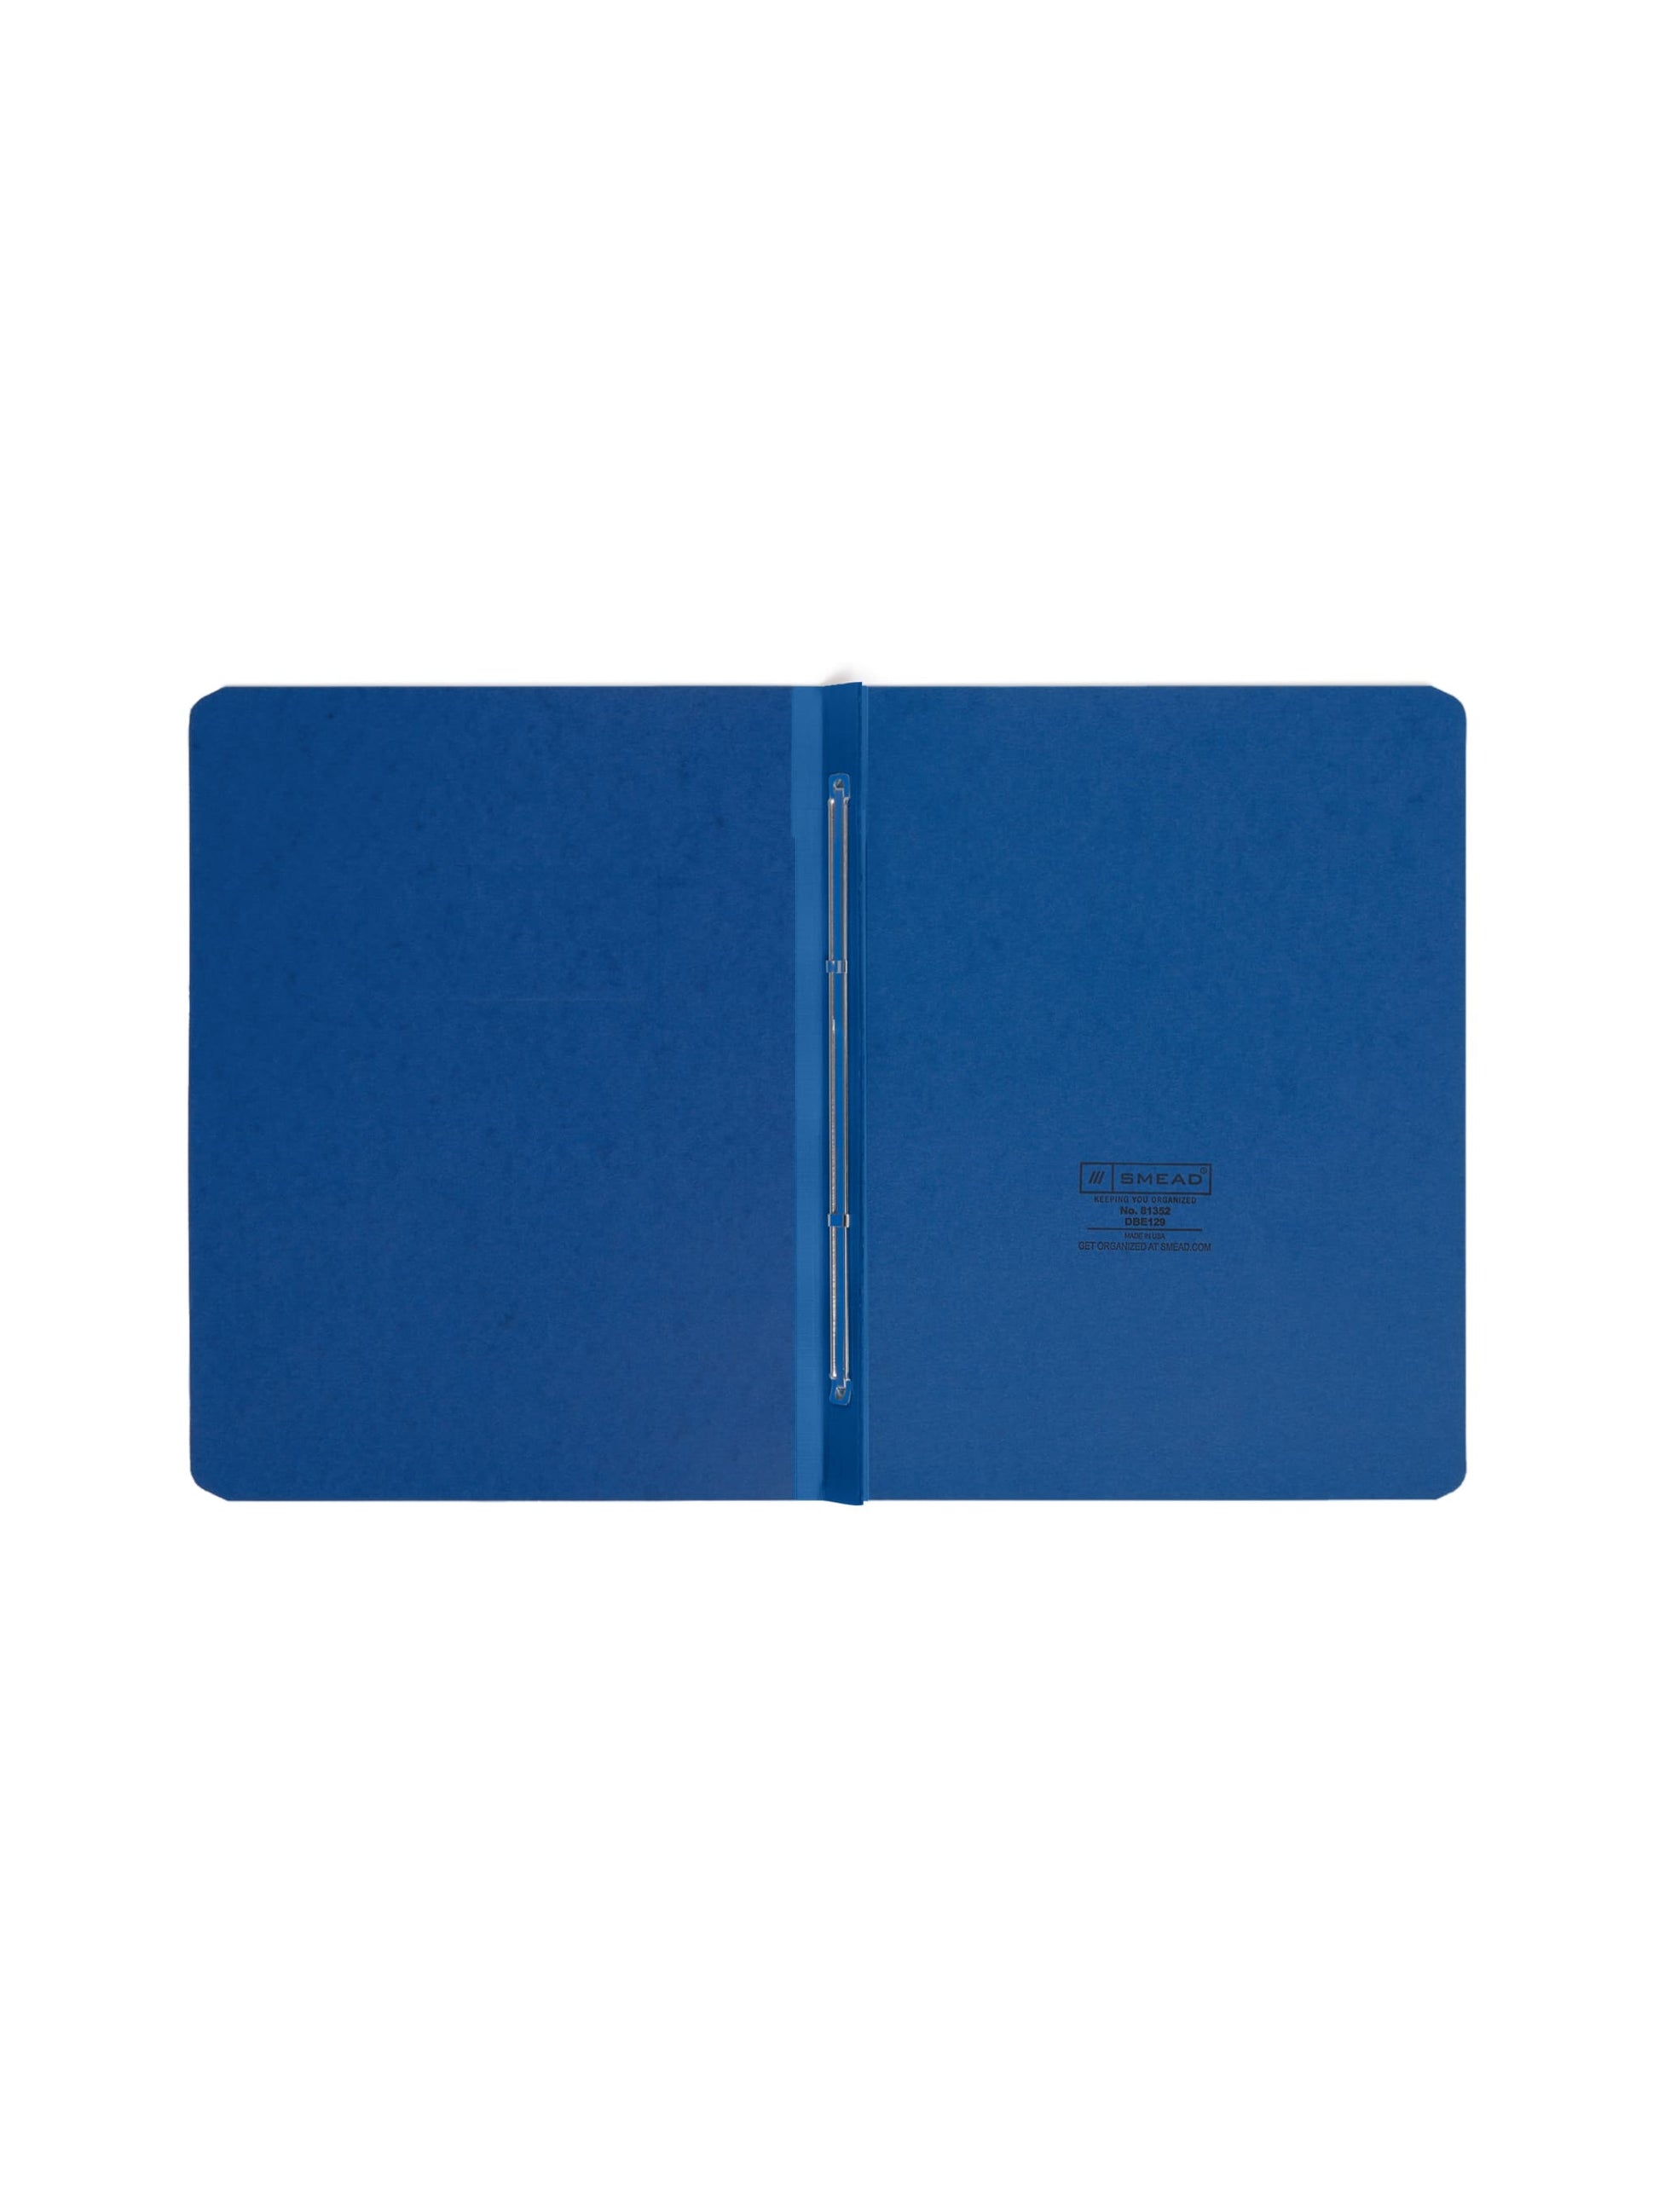 Premium Pressboard Report Covers, 8 1/2-inch Metal Prong Side Fastener with Compressor, 3-inch Expansion, Dark Blue Color, Letter Size, Set of 1, 086486813525